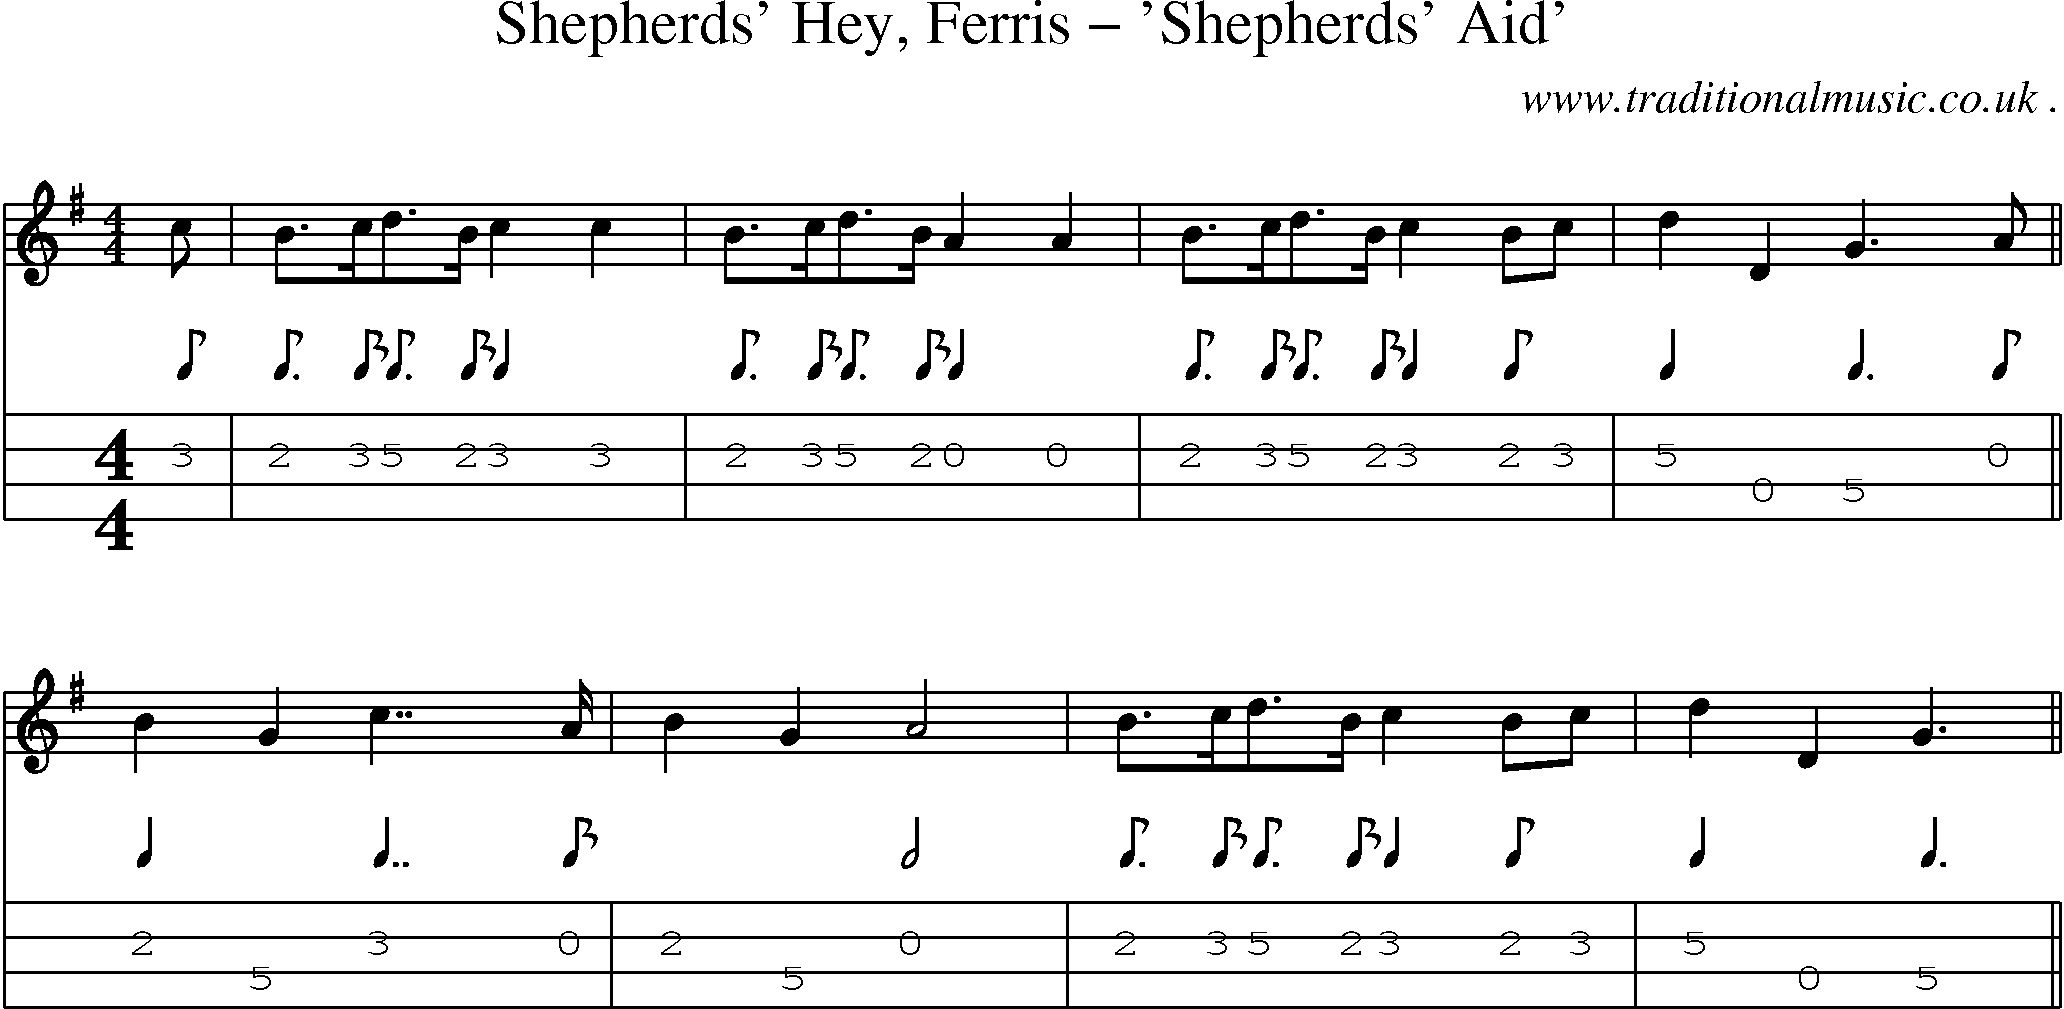 Sheet-Music and Mandolin Tabs for Shepherds Hey Ferris Shepherds Aid